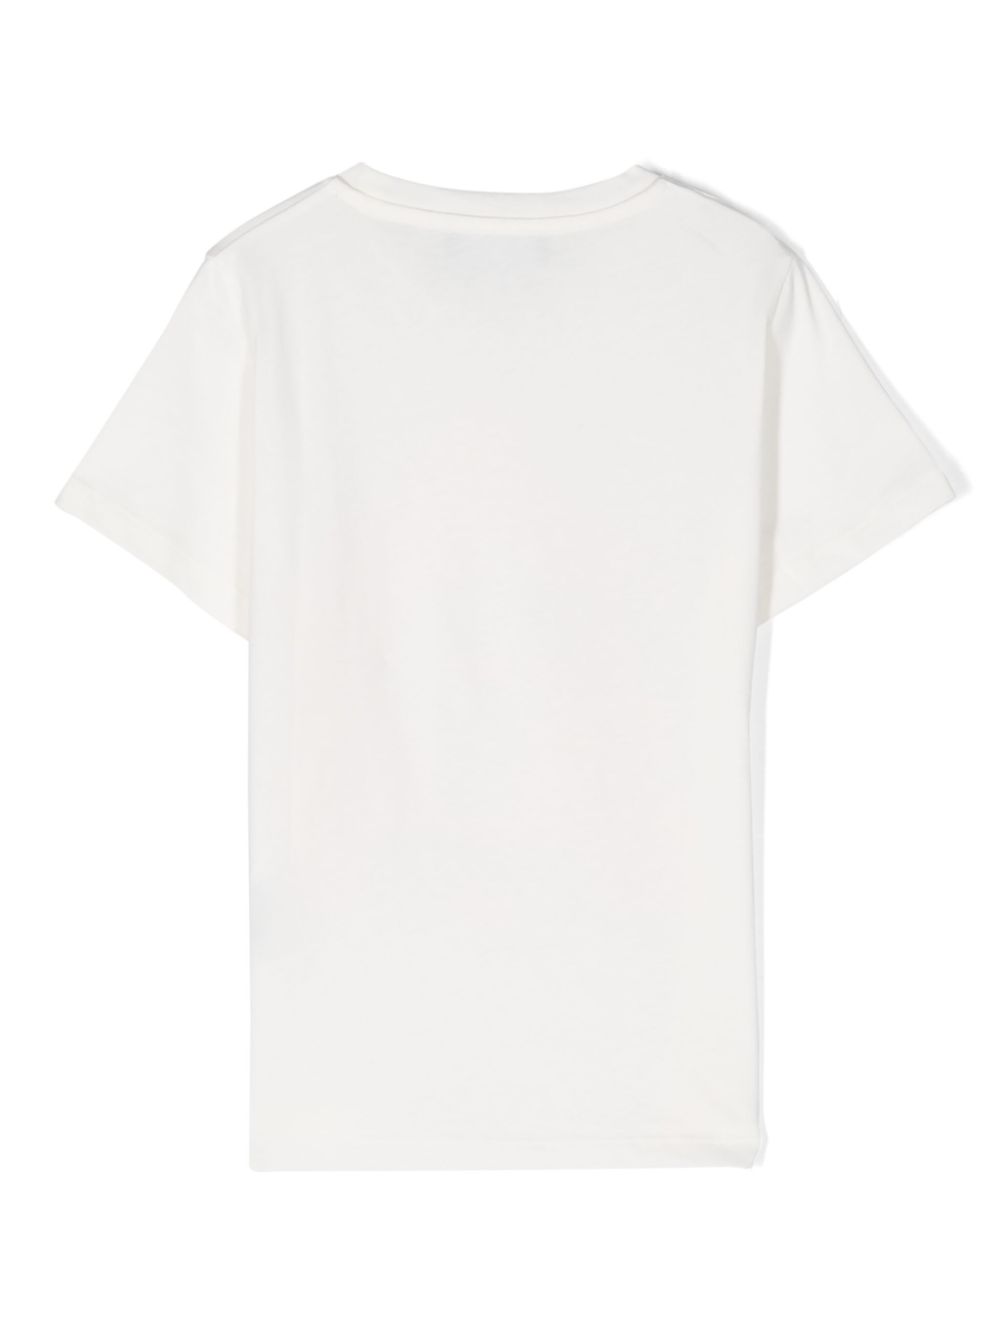 T-shirt bianca/rosa bambino